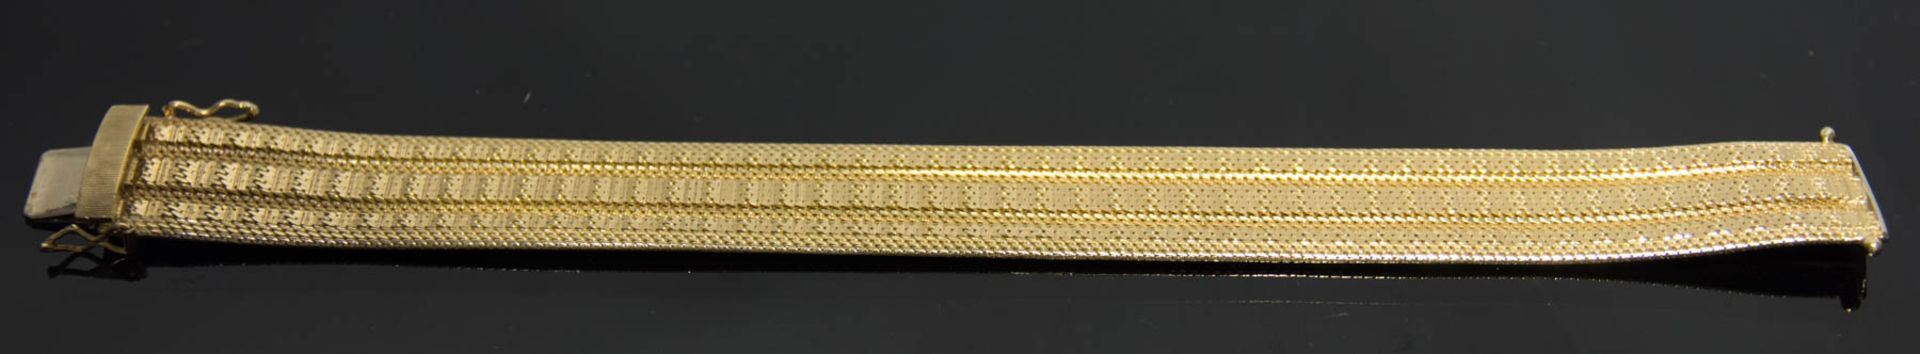 GLIEDER-GOLDARMBAND, 750er Gelbgold.47 g, 750er Gelbgold. 20 cm Lang. - Bild 2 aus 6